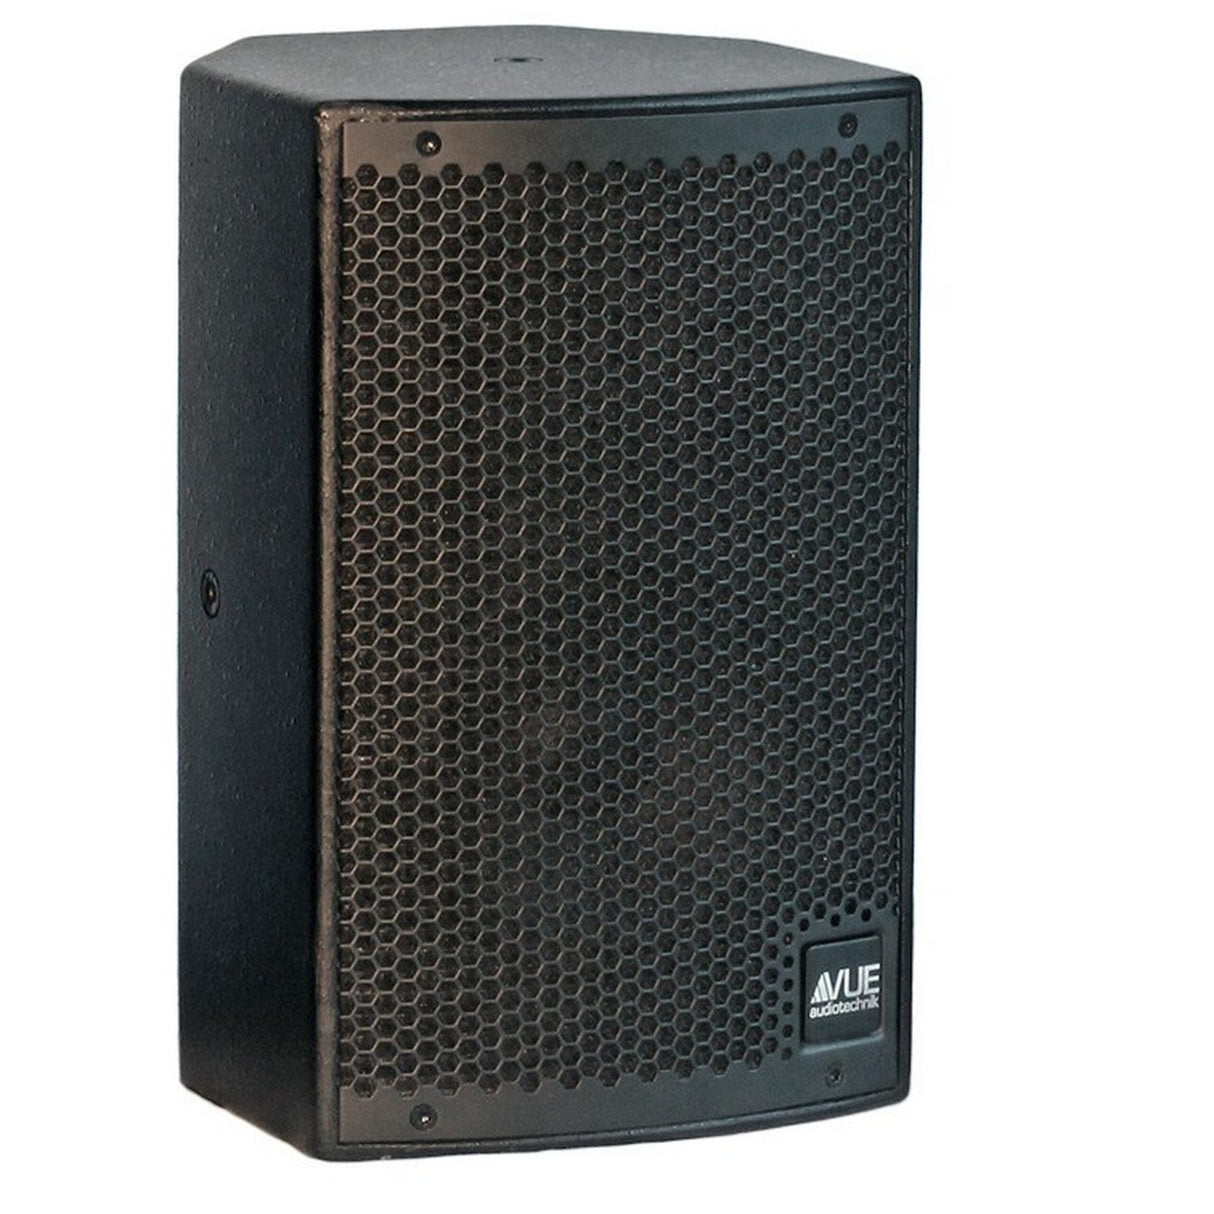 VUE Audiotechnik i-6a 6-Inch 2-Way Full Range Loudspeaker with Built-In Power Amplifier, Black